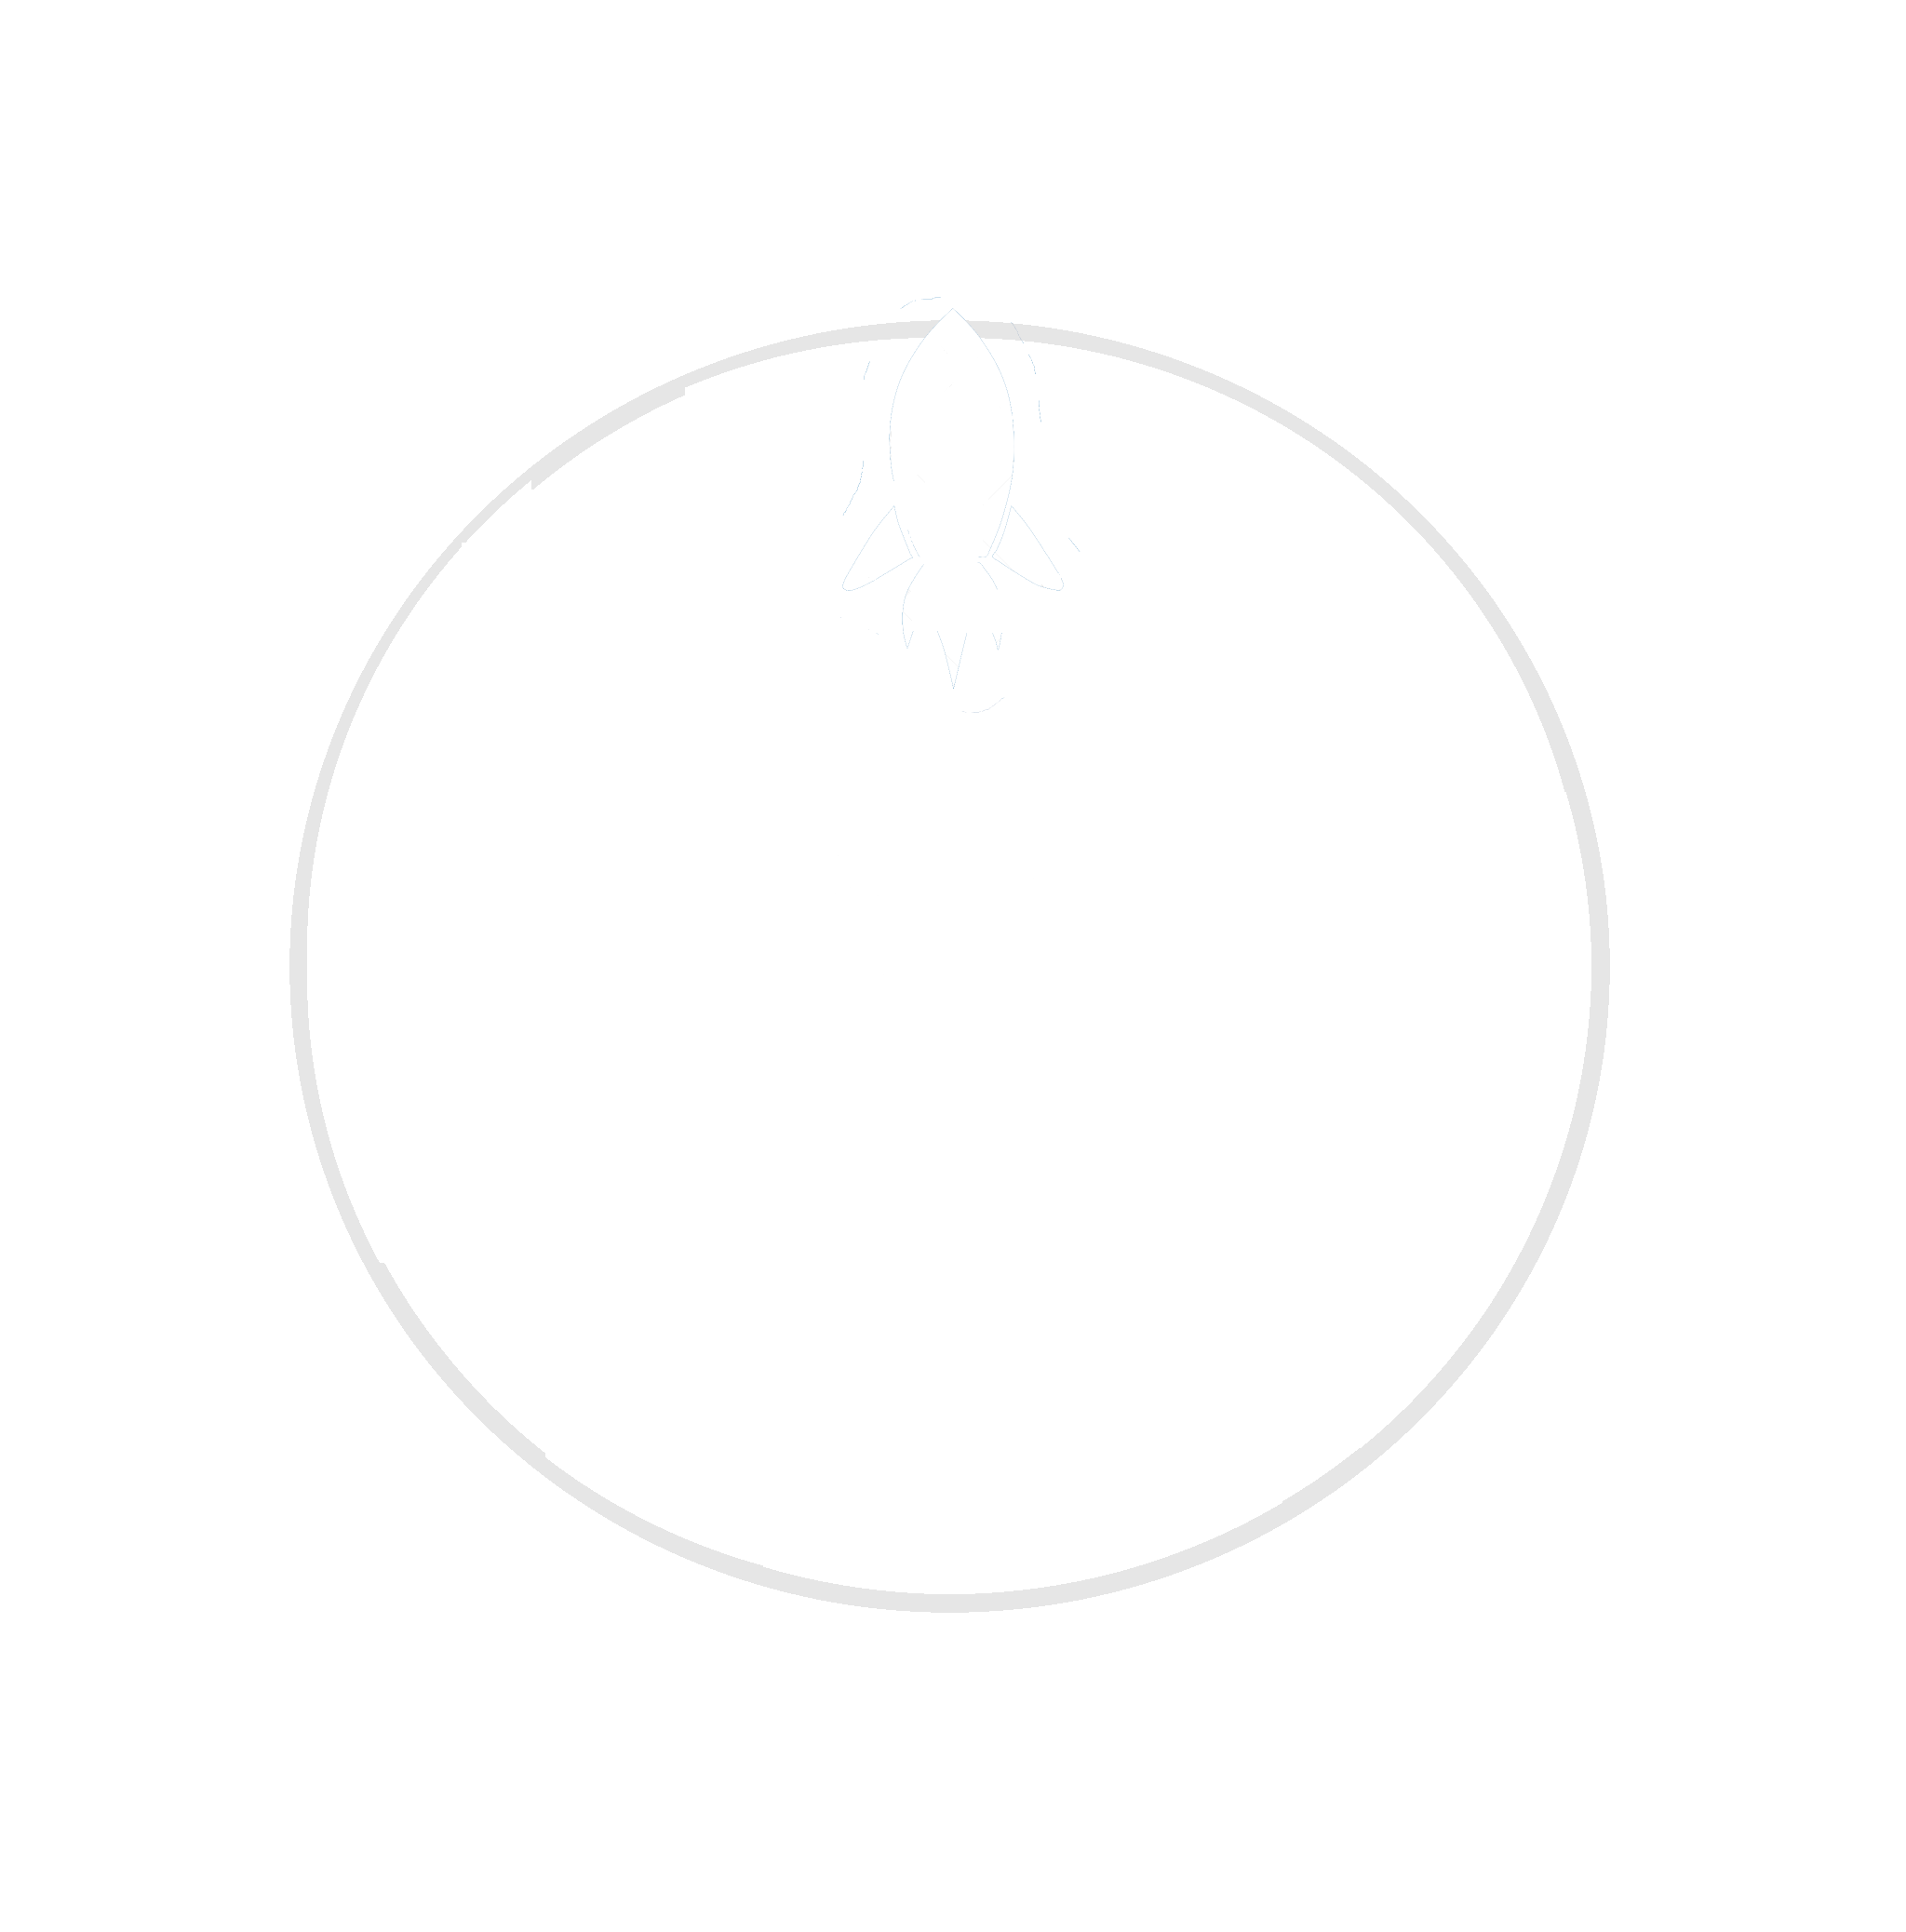 Pecos Valley Public Services